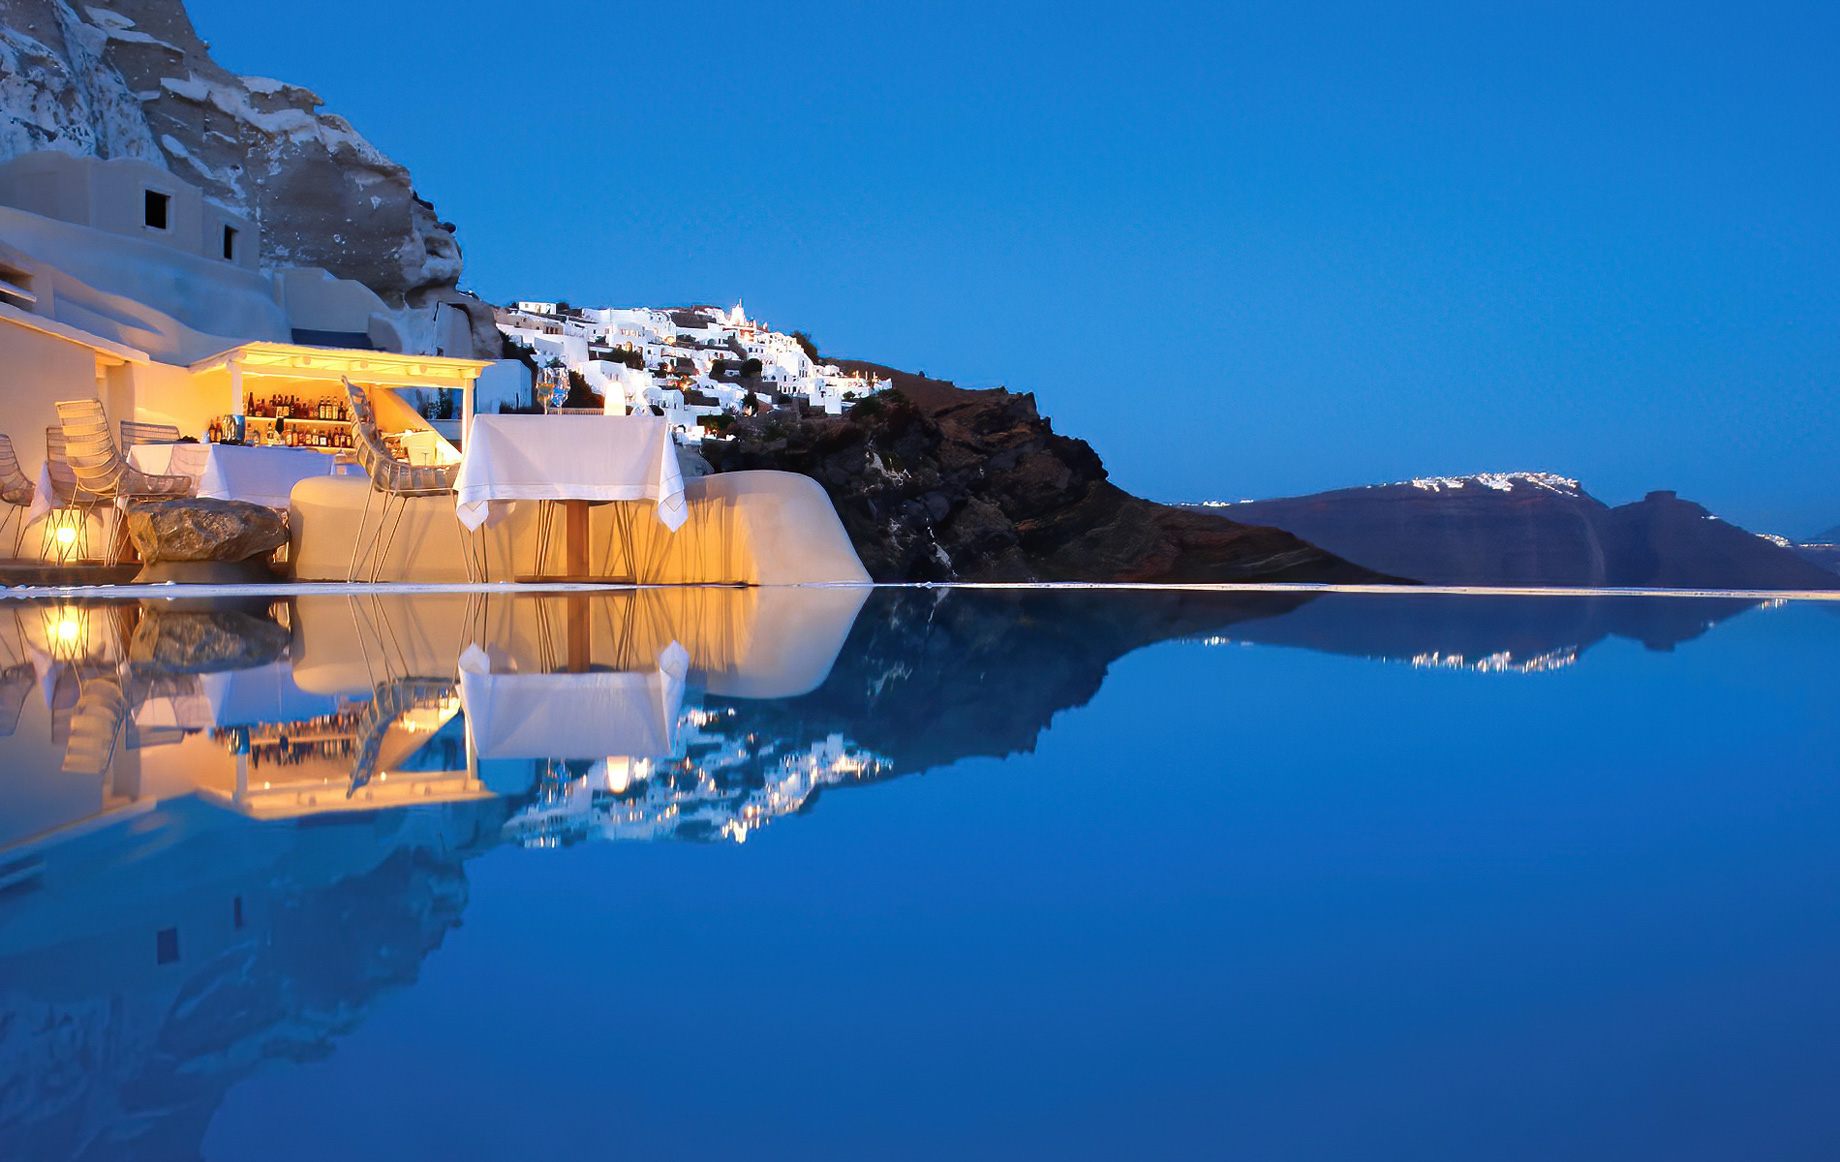 Mystique Hotel Santorini – Oia, Santorini Island, Greece - Cliffside Pool Deck Dining Tables